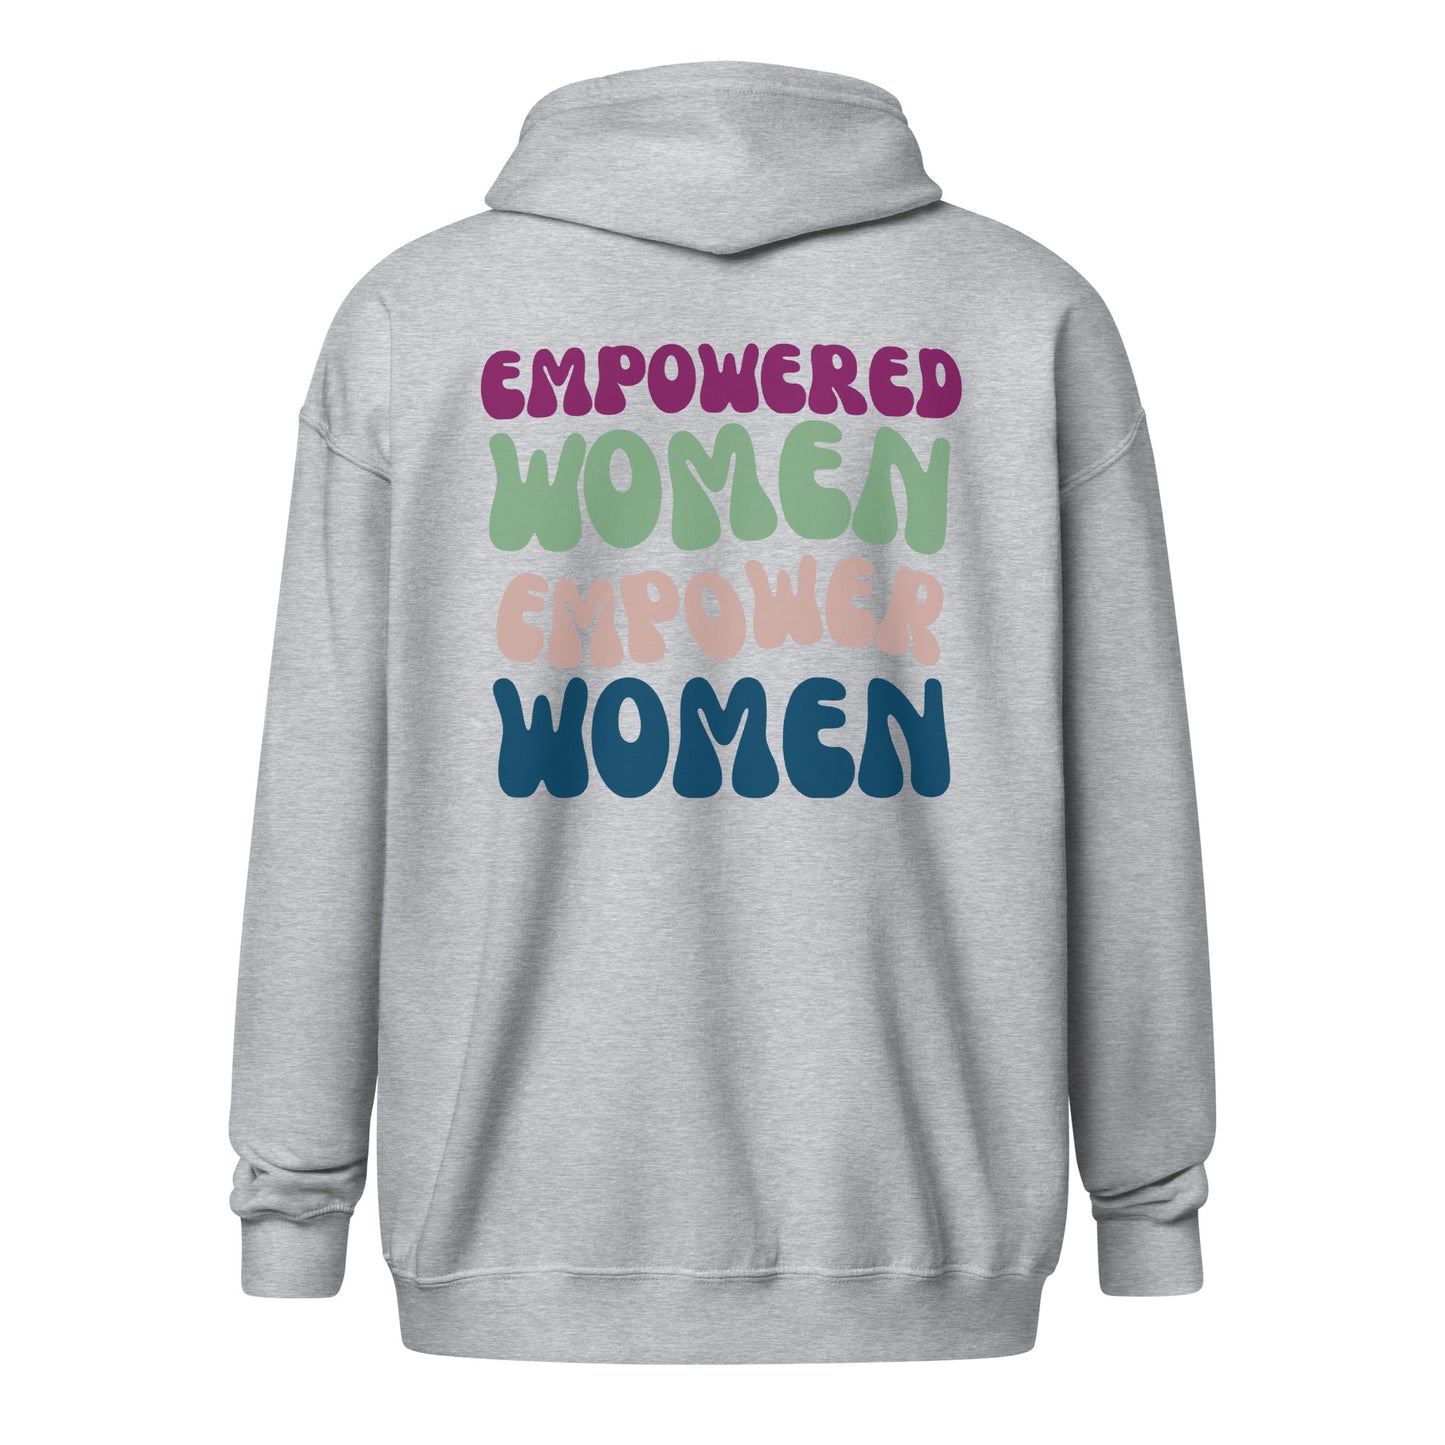 Empowered Women Heavy Zip Hoodie